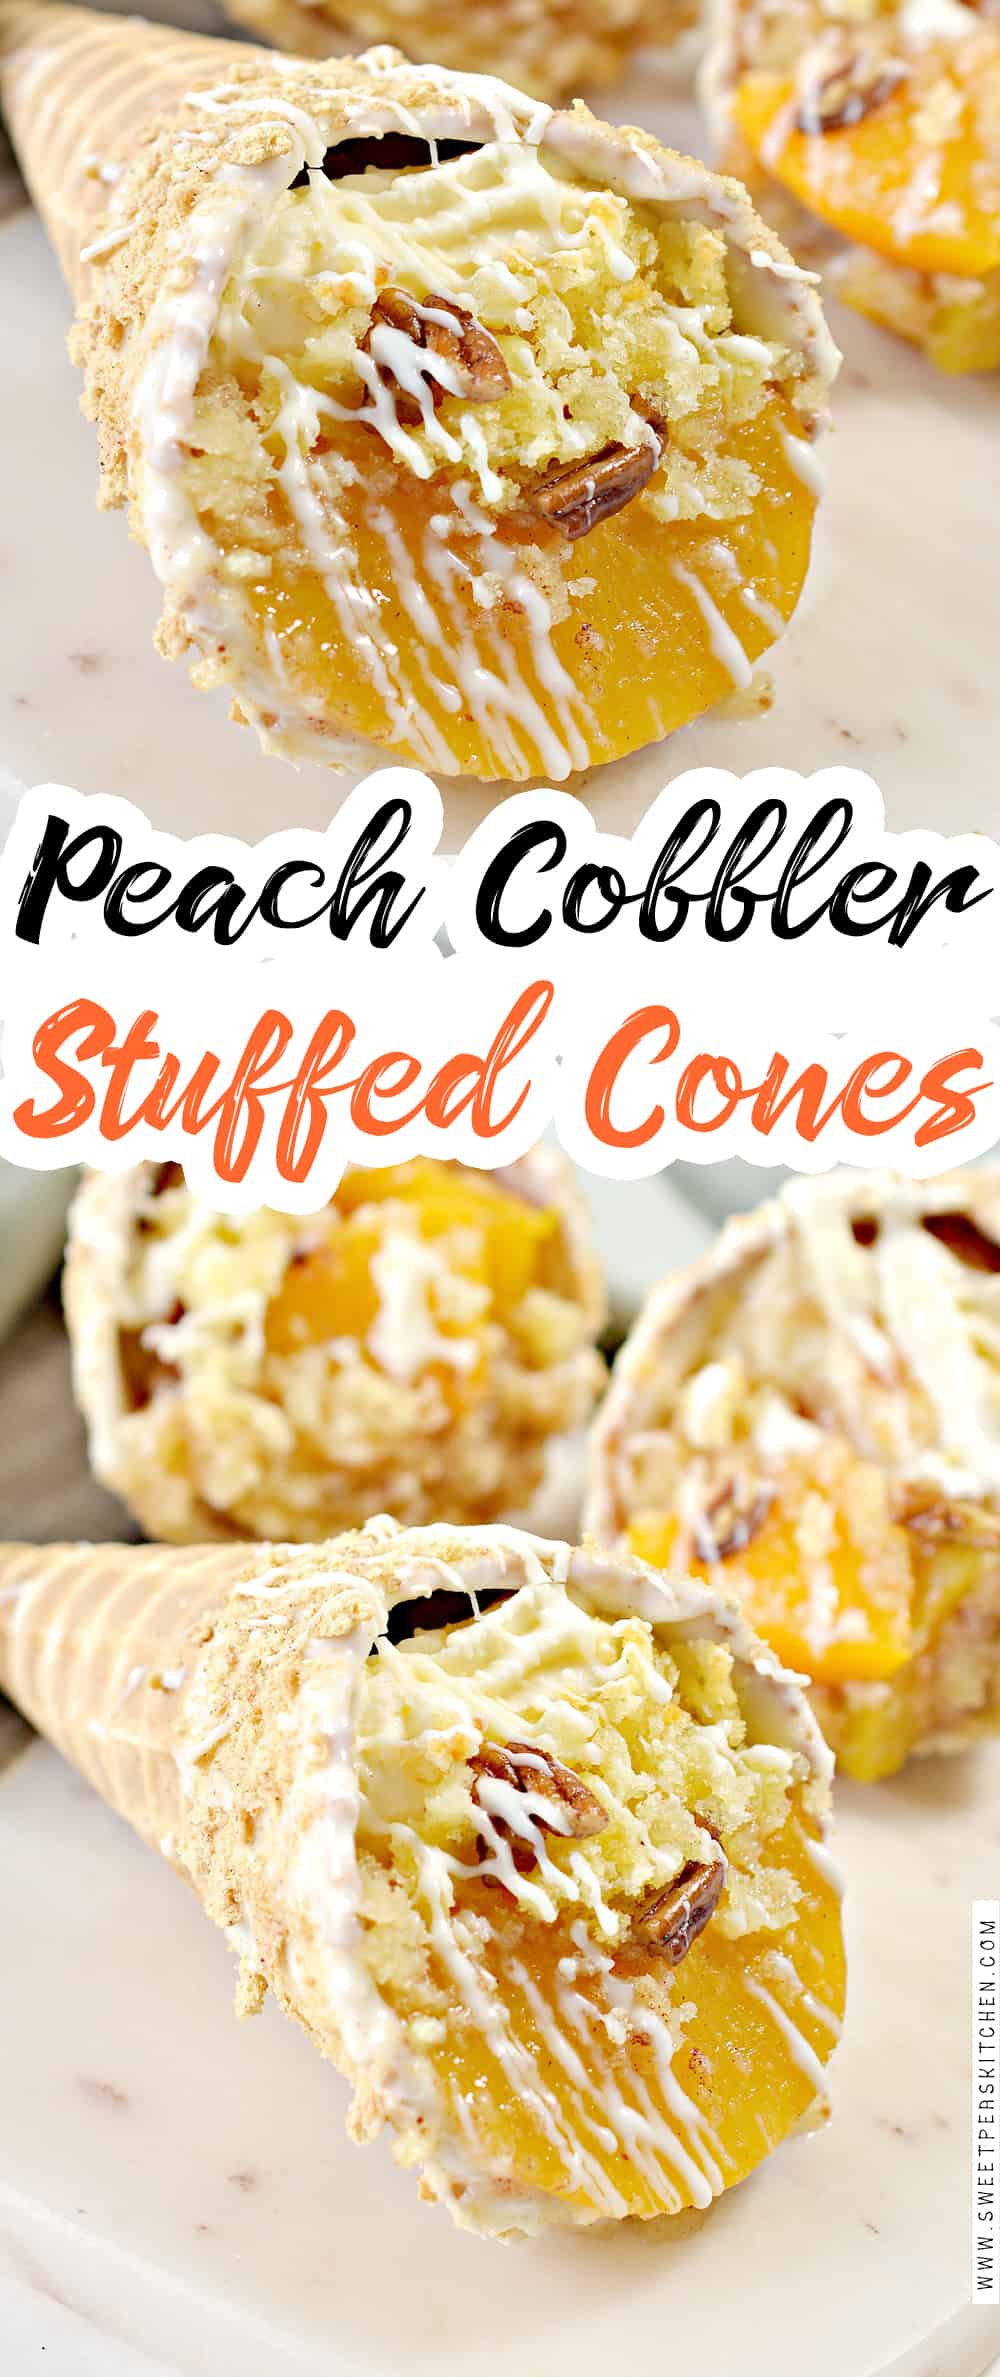 Peach Cobbler Stuffed Cones